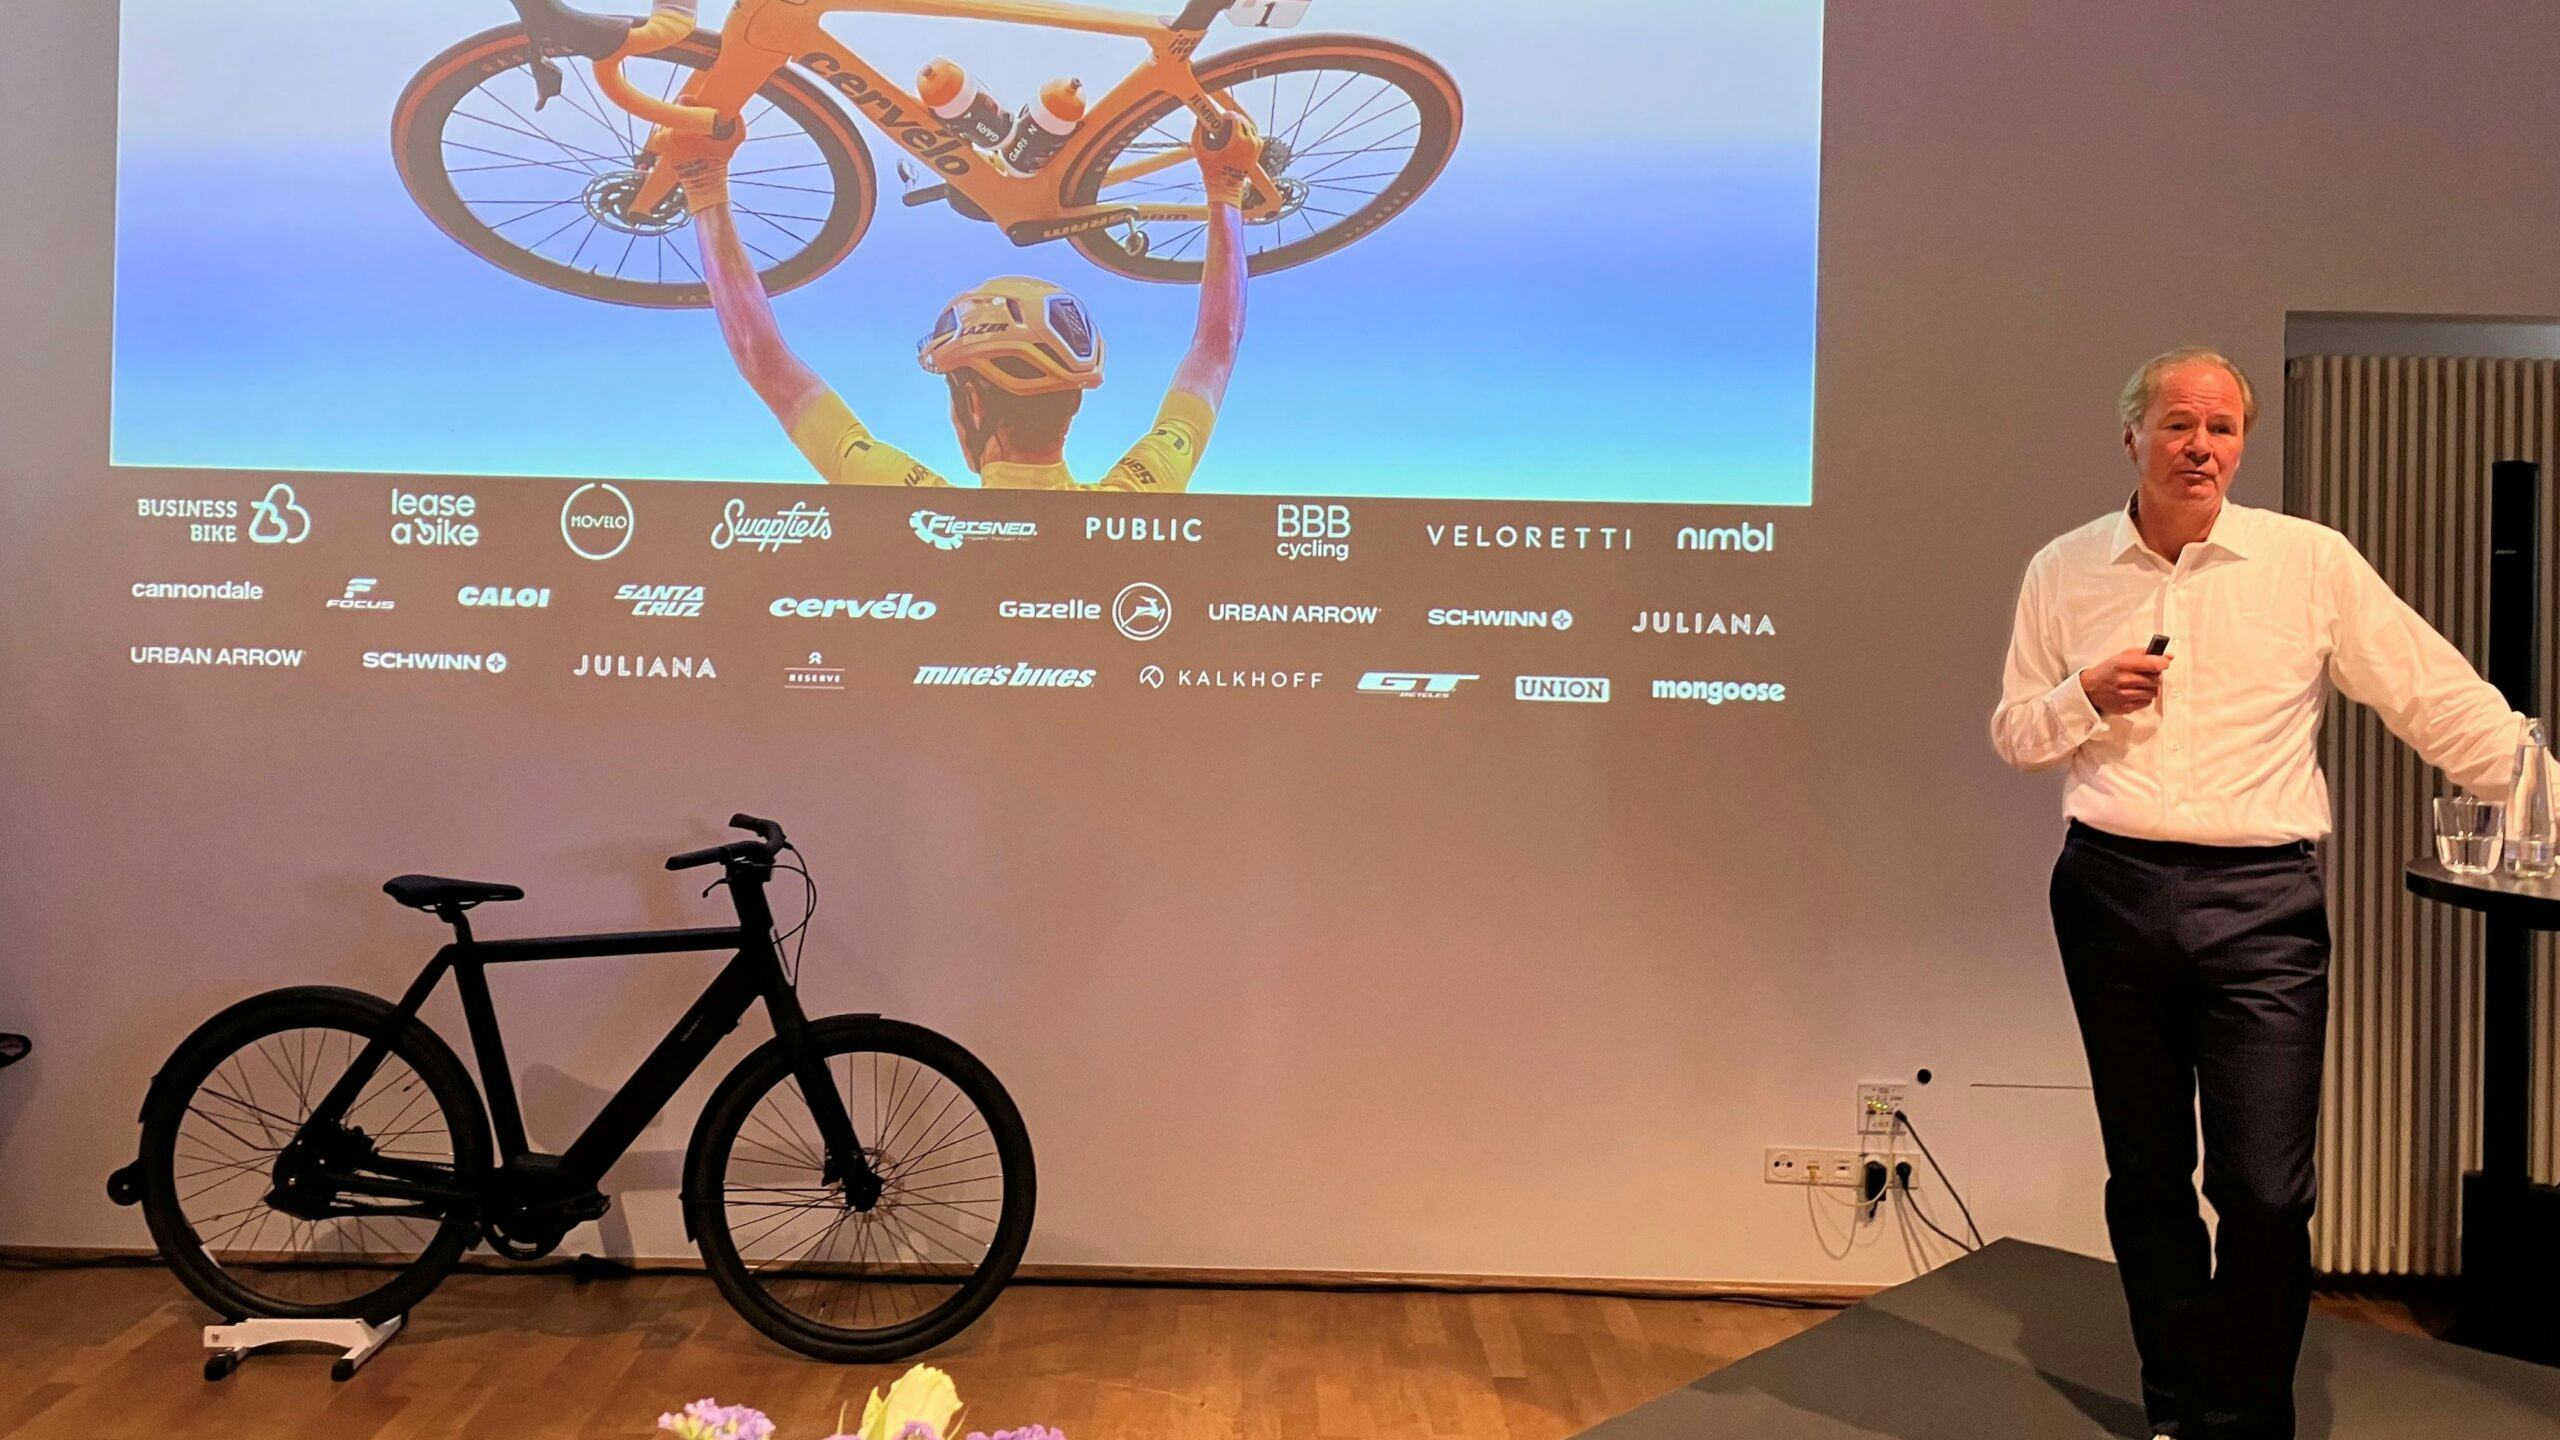 Janus Smalbraak展示目前Pon旗下所有自行車品牌組合。